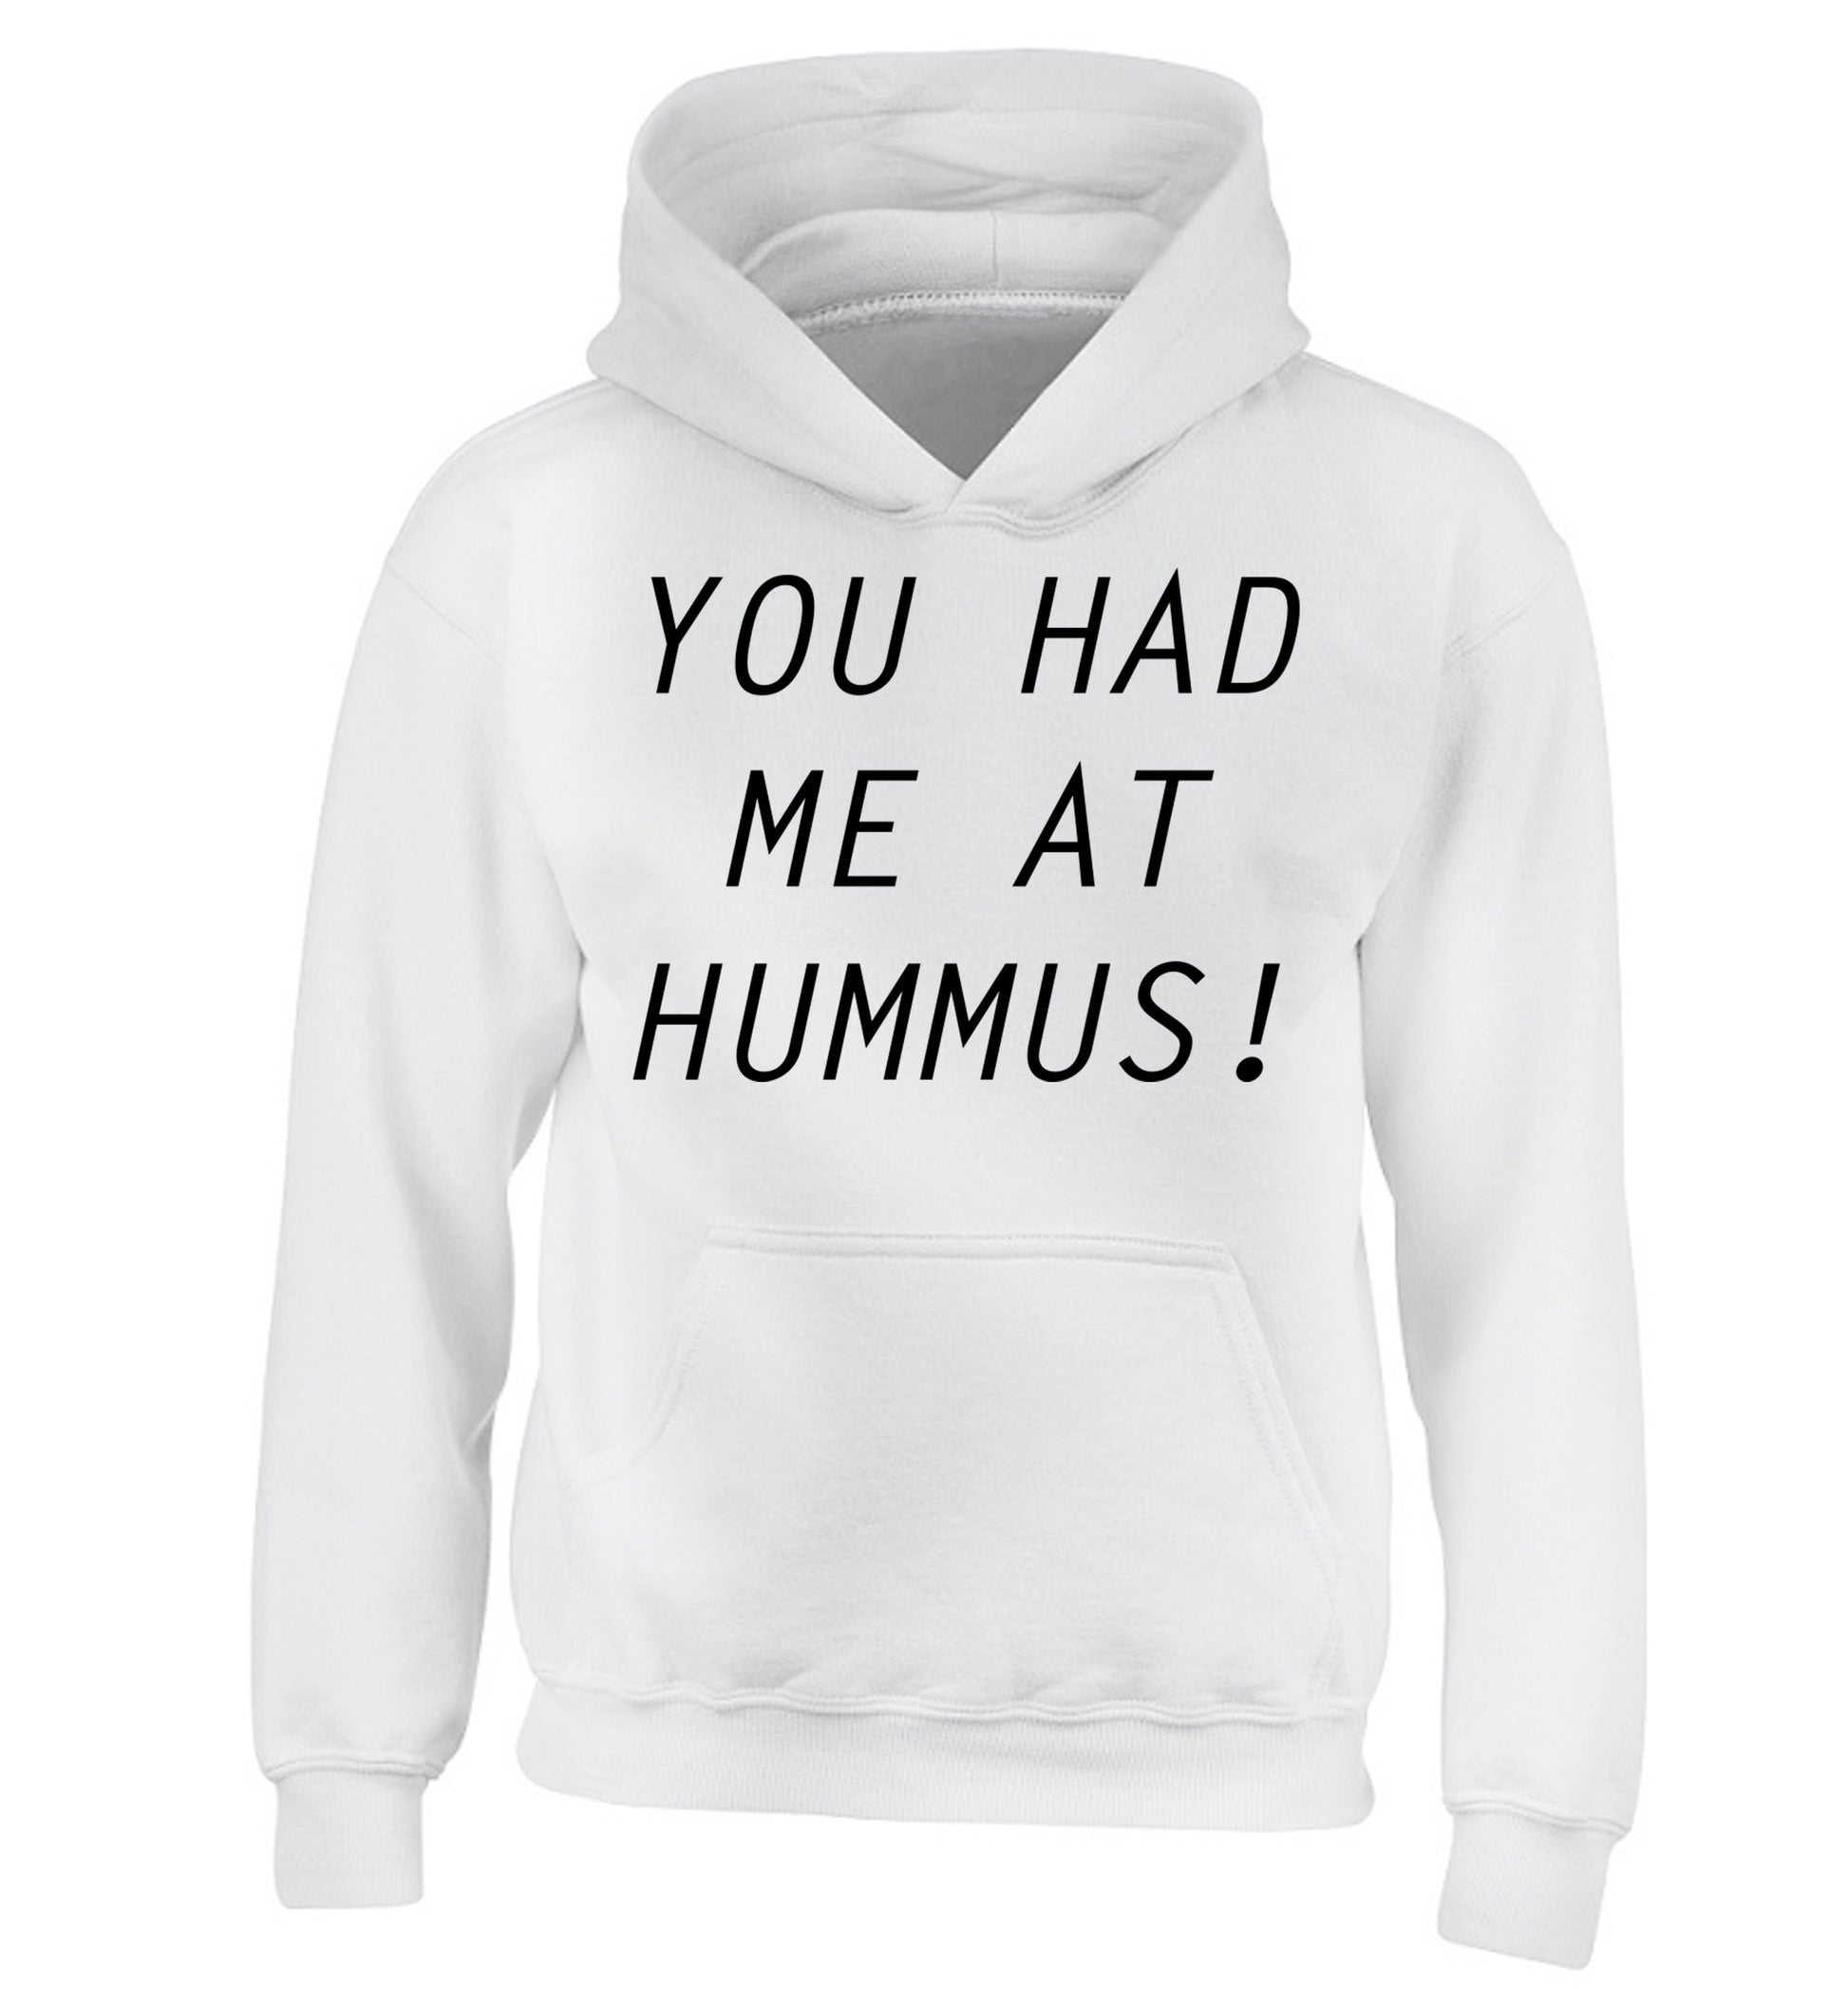 You had me at hummus children's white hoodie 12-14 Years